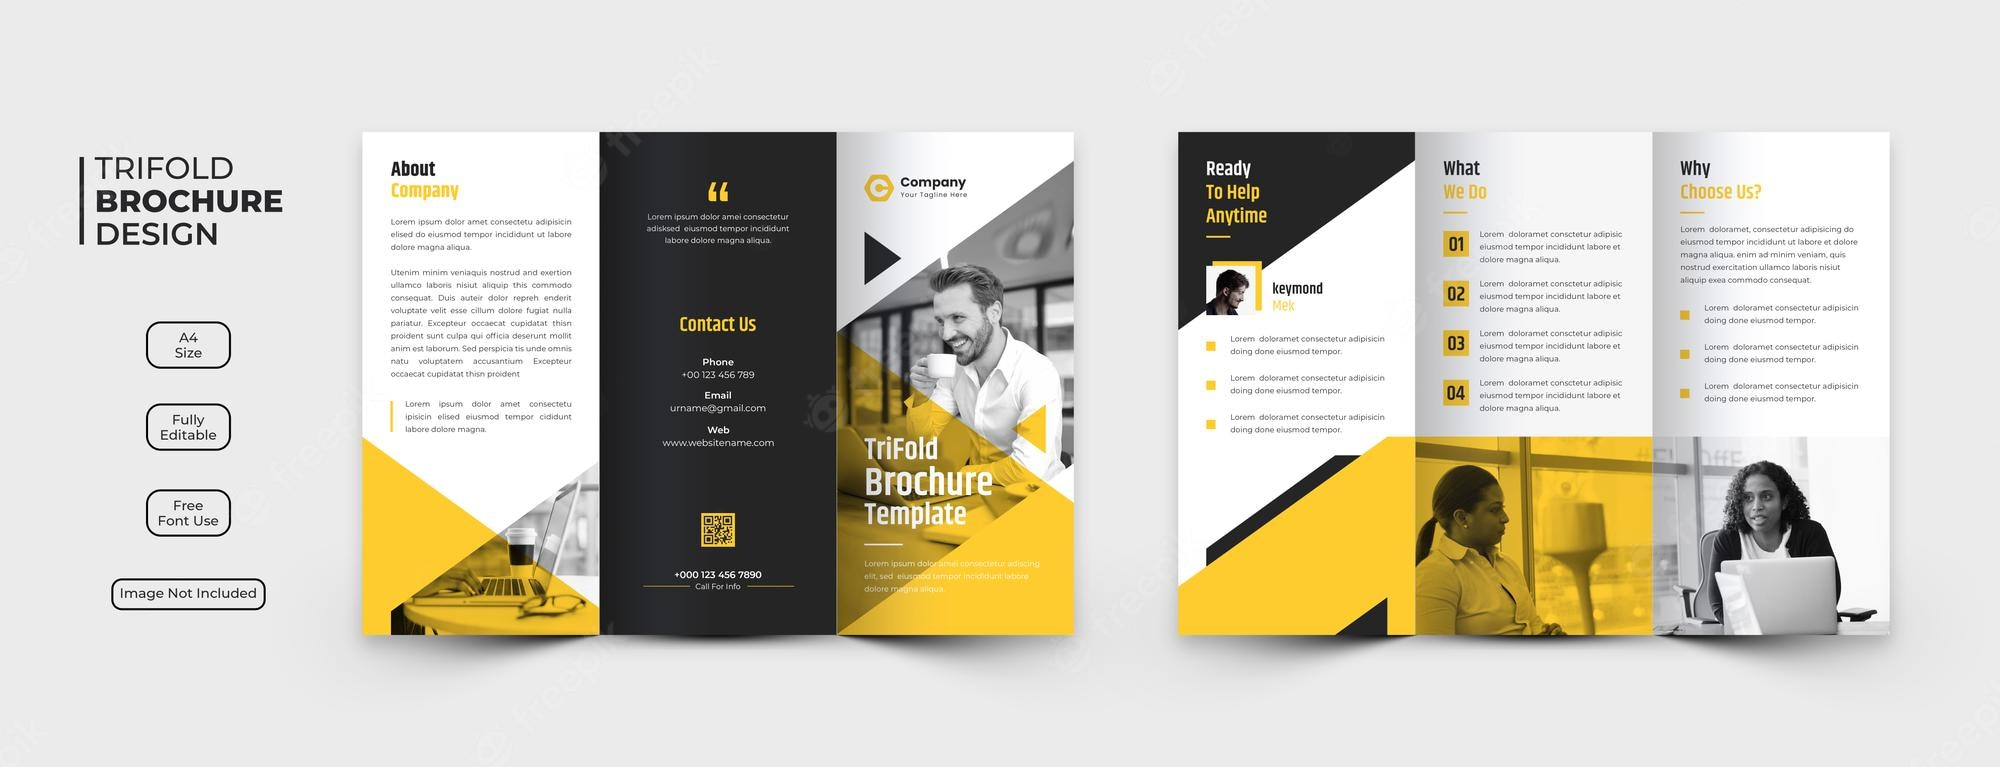 Brochure design Images - Free Download on Freepik Regarding Online Free Brochure Design Templates